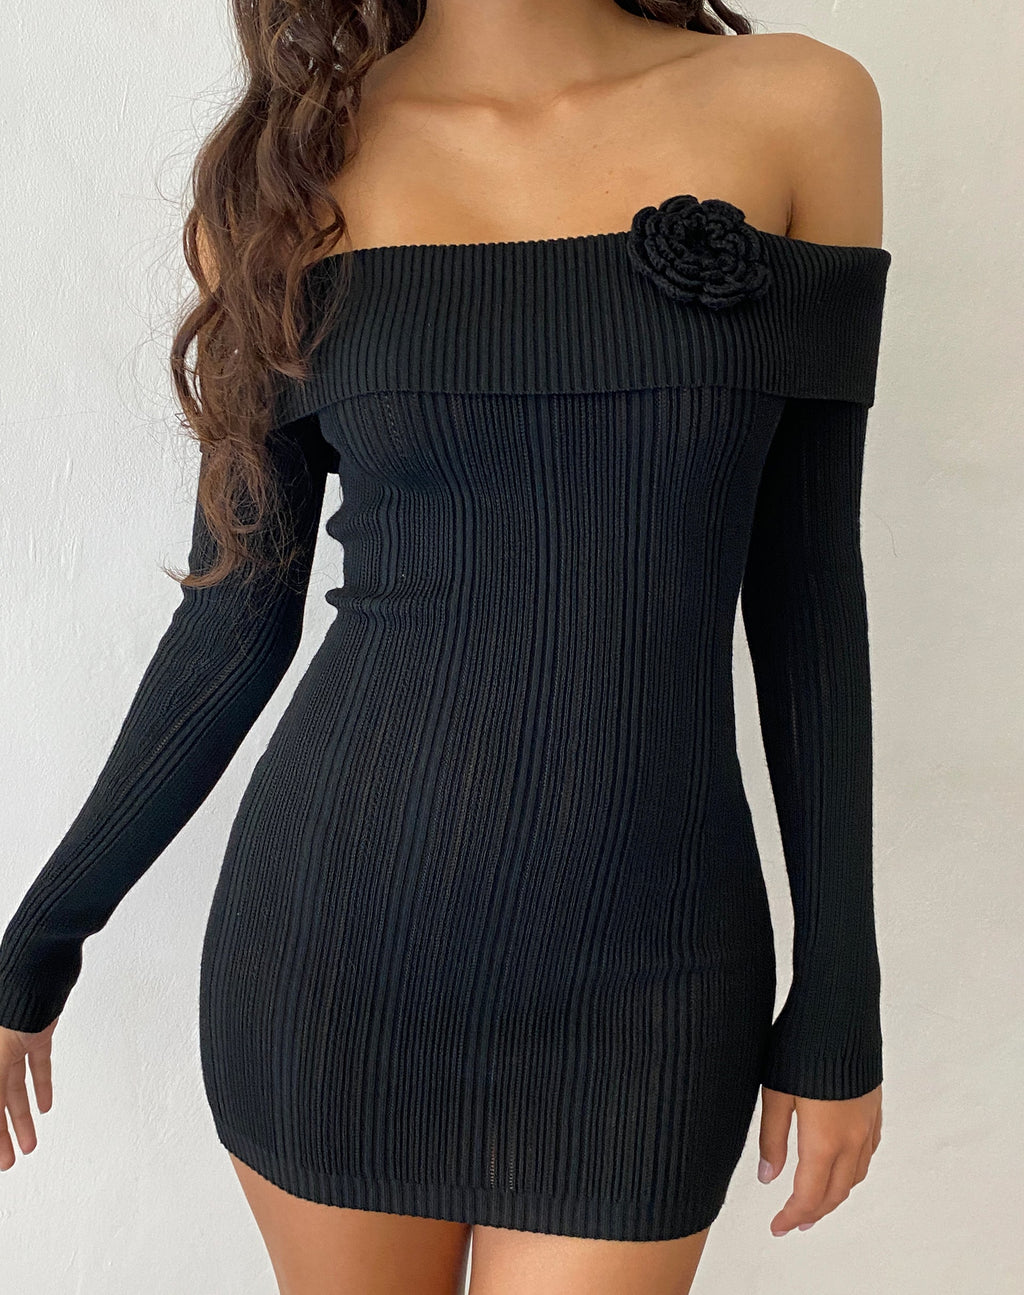 Mirabel Knitted Bardot Mini Dress in Black with Rosette